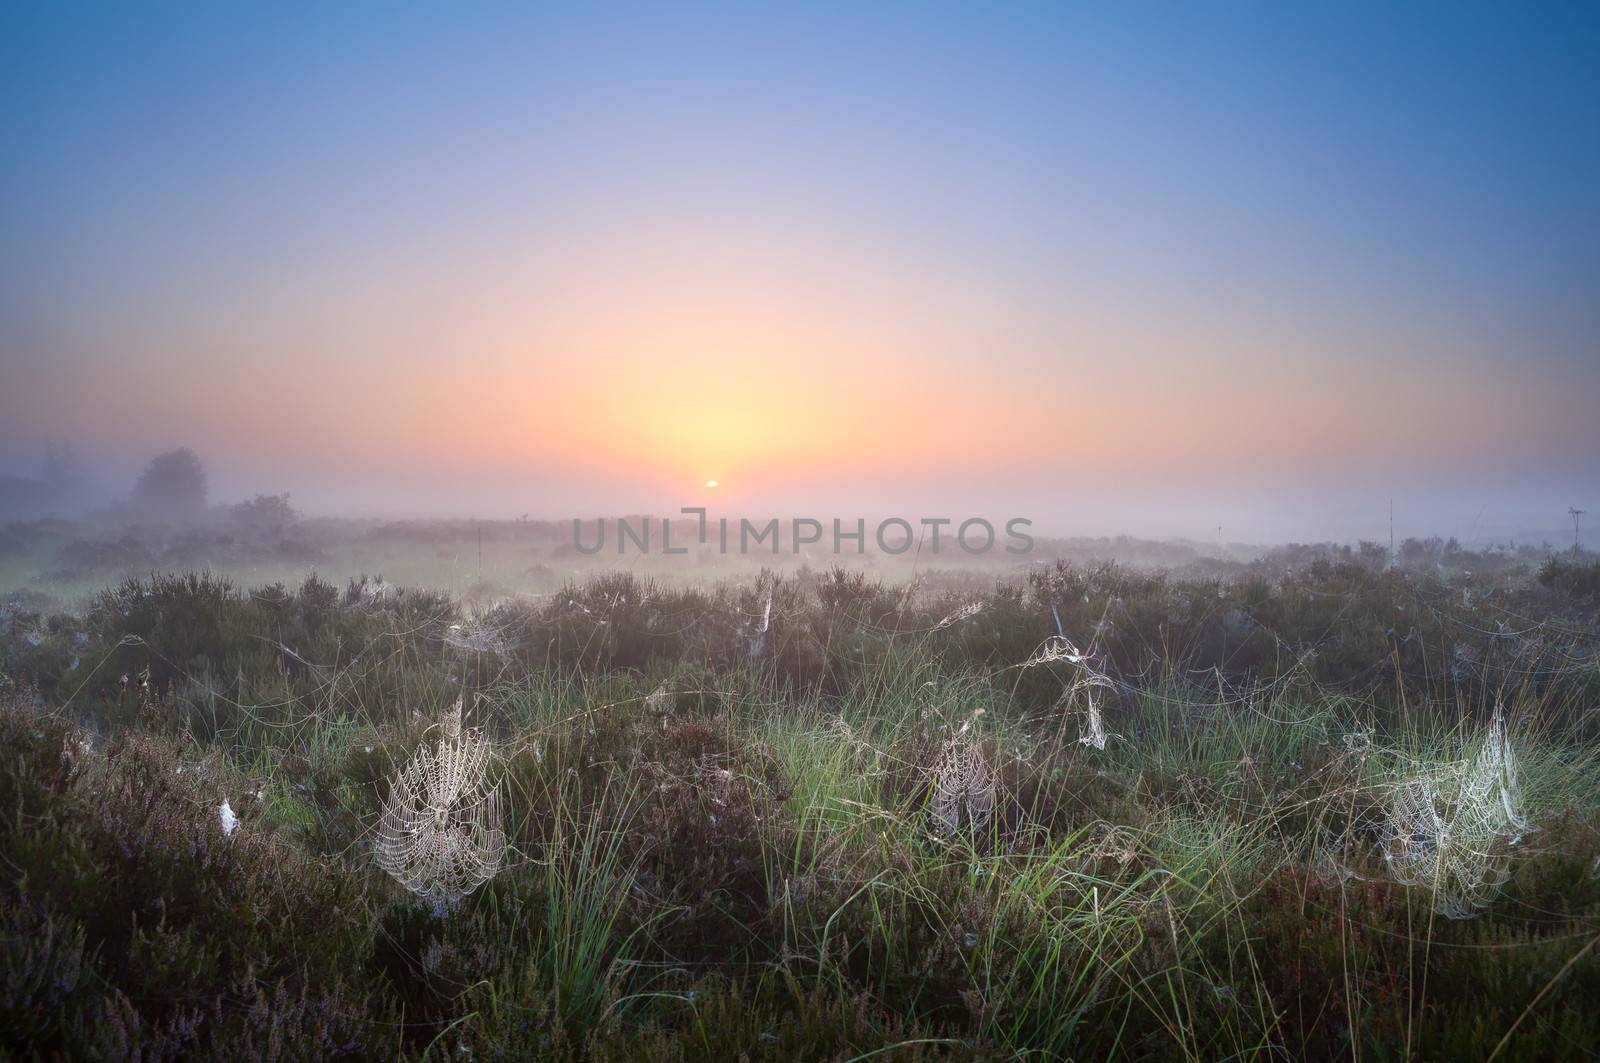 spiderweb in morning sunrise sunlight on swamps